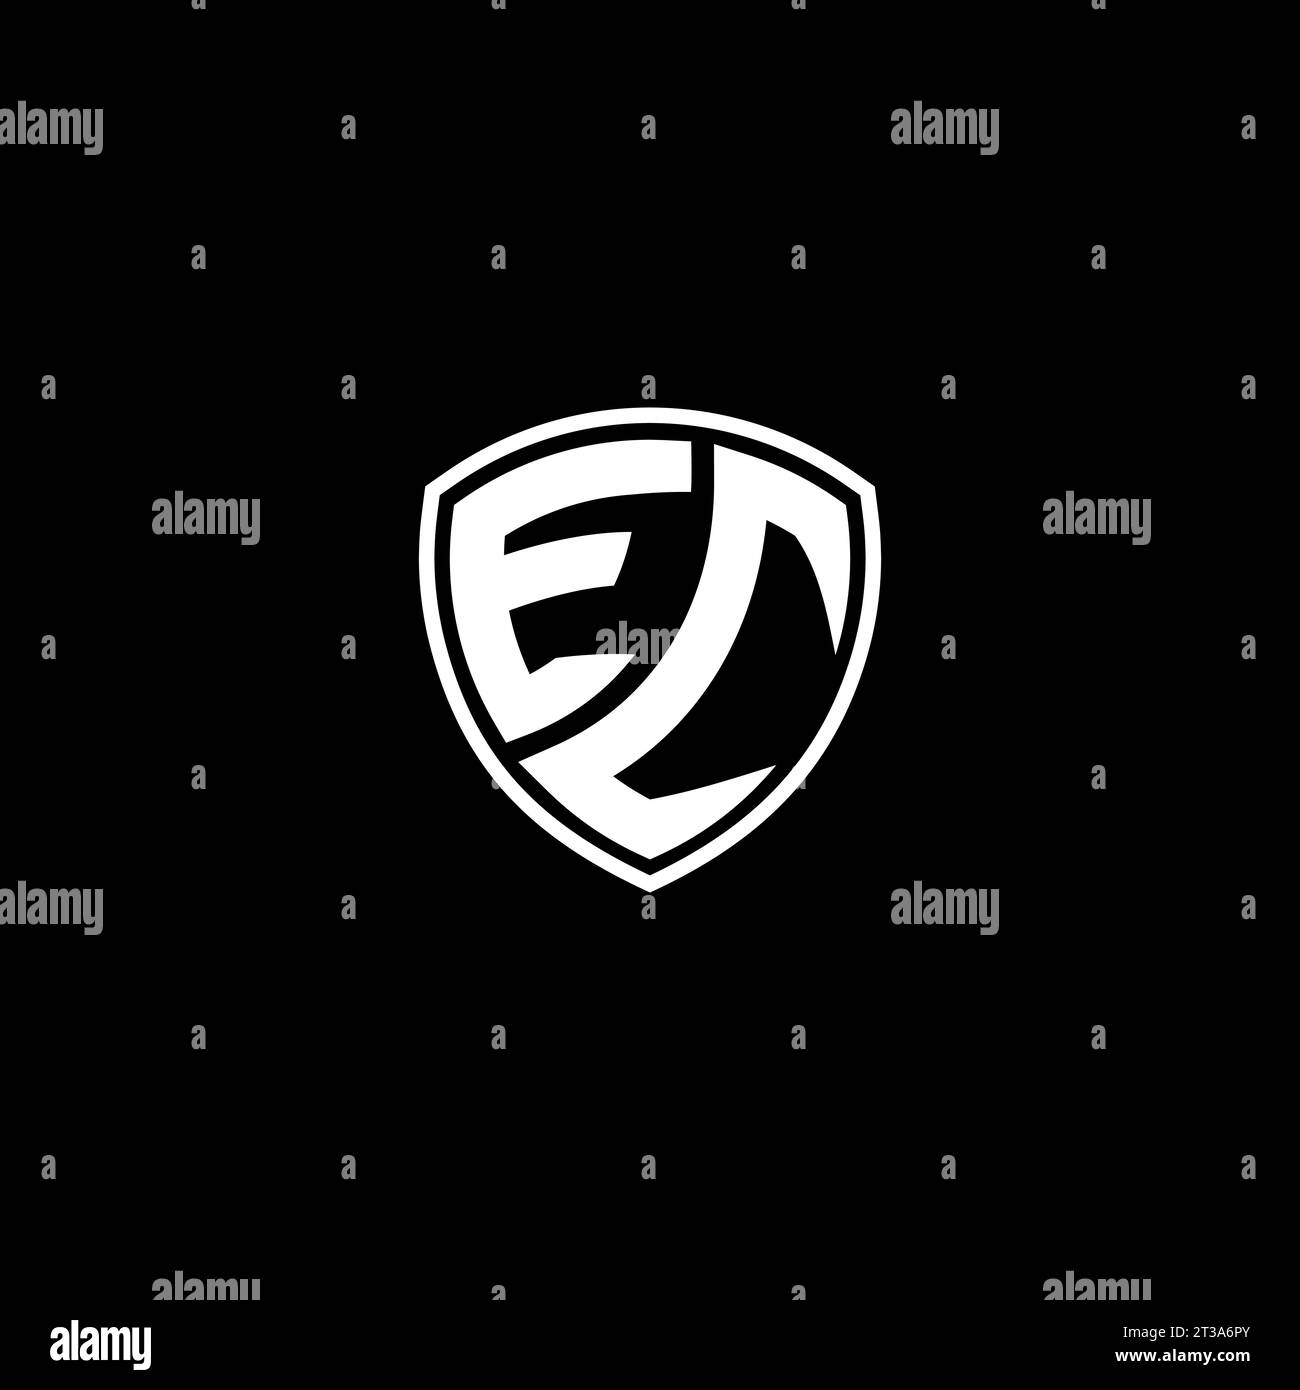 EC logo monogram emblem style with shield shape design template ideas Stock Vector